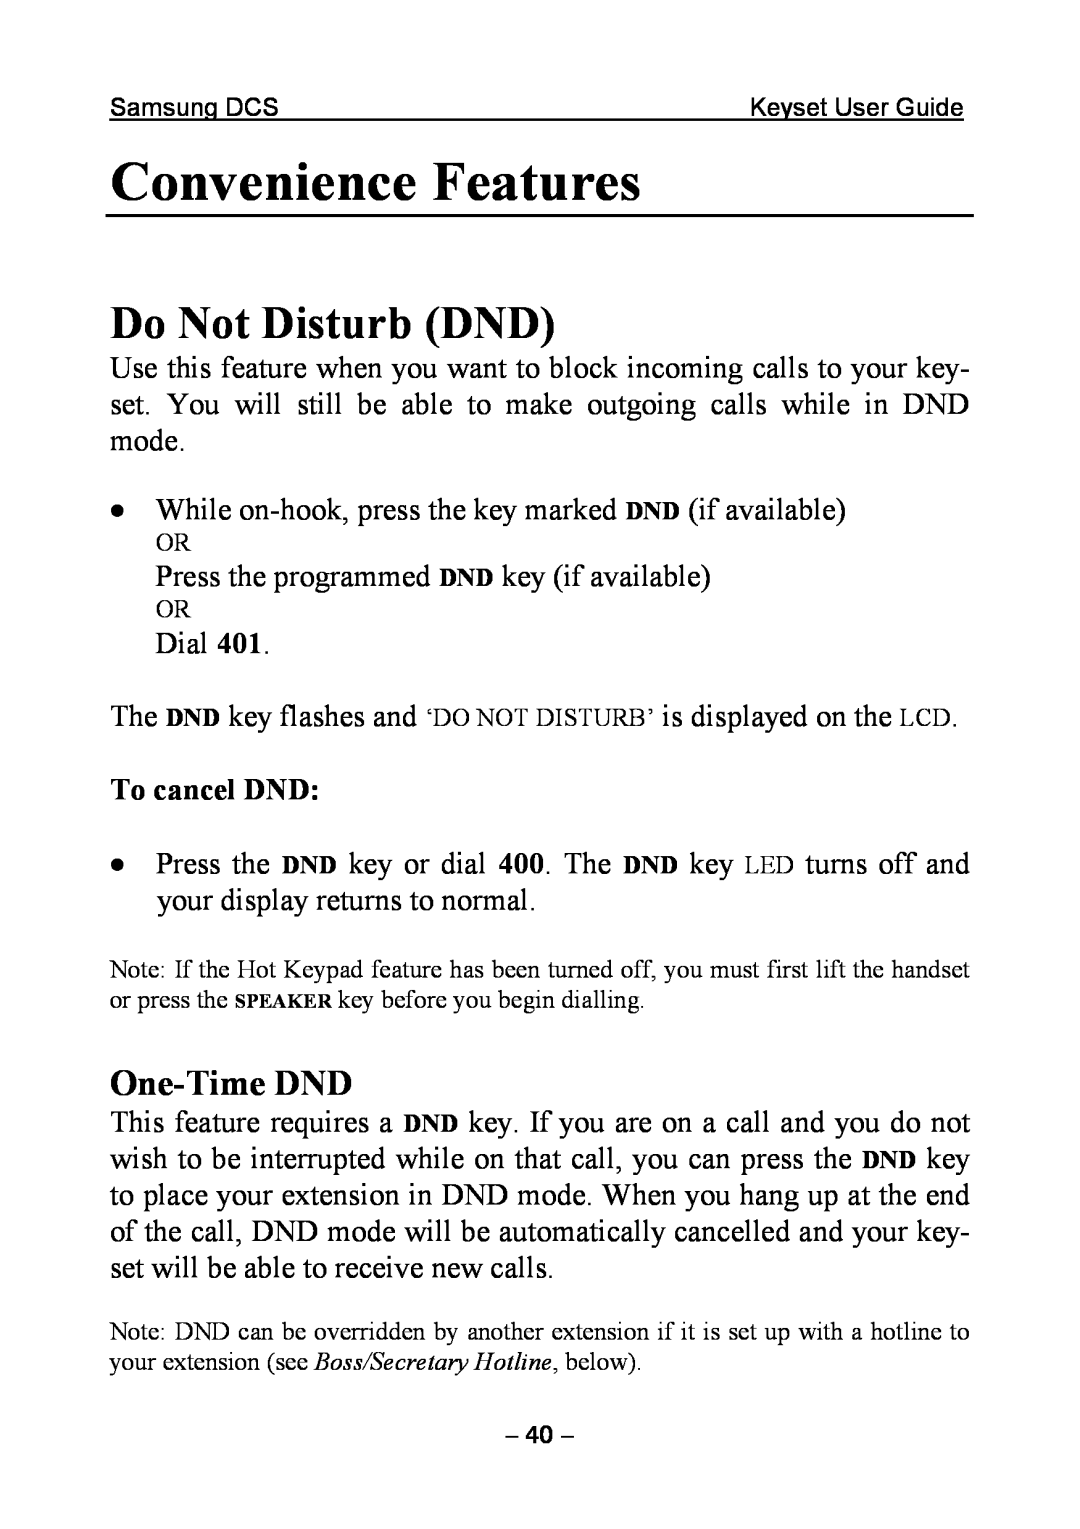 Samsung DCS KEYSET manual Convenience Features, Do Not Disturb DND, One-Time DND, To cancel DND 